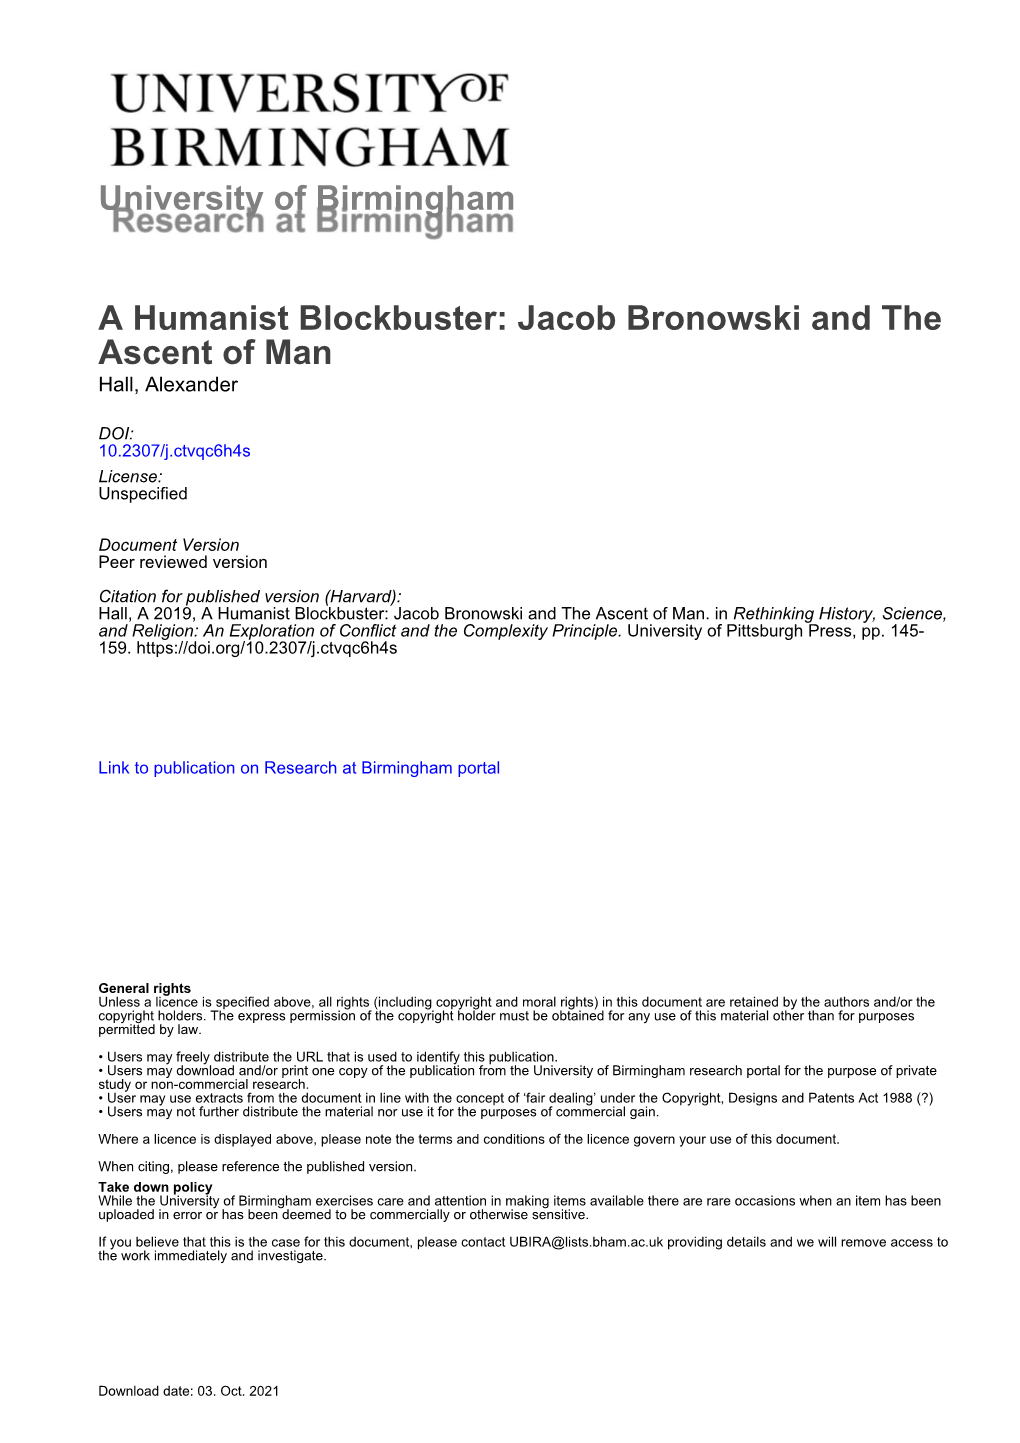 Humanist Blockbuster: Jacob Bronowski and the Ascent of Man Hall, Alexander